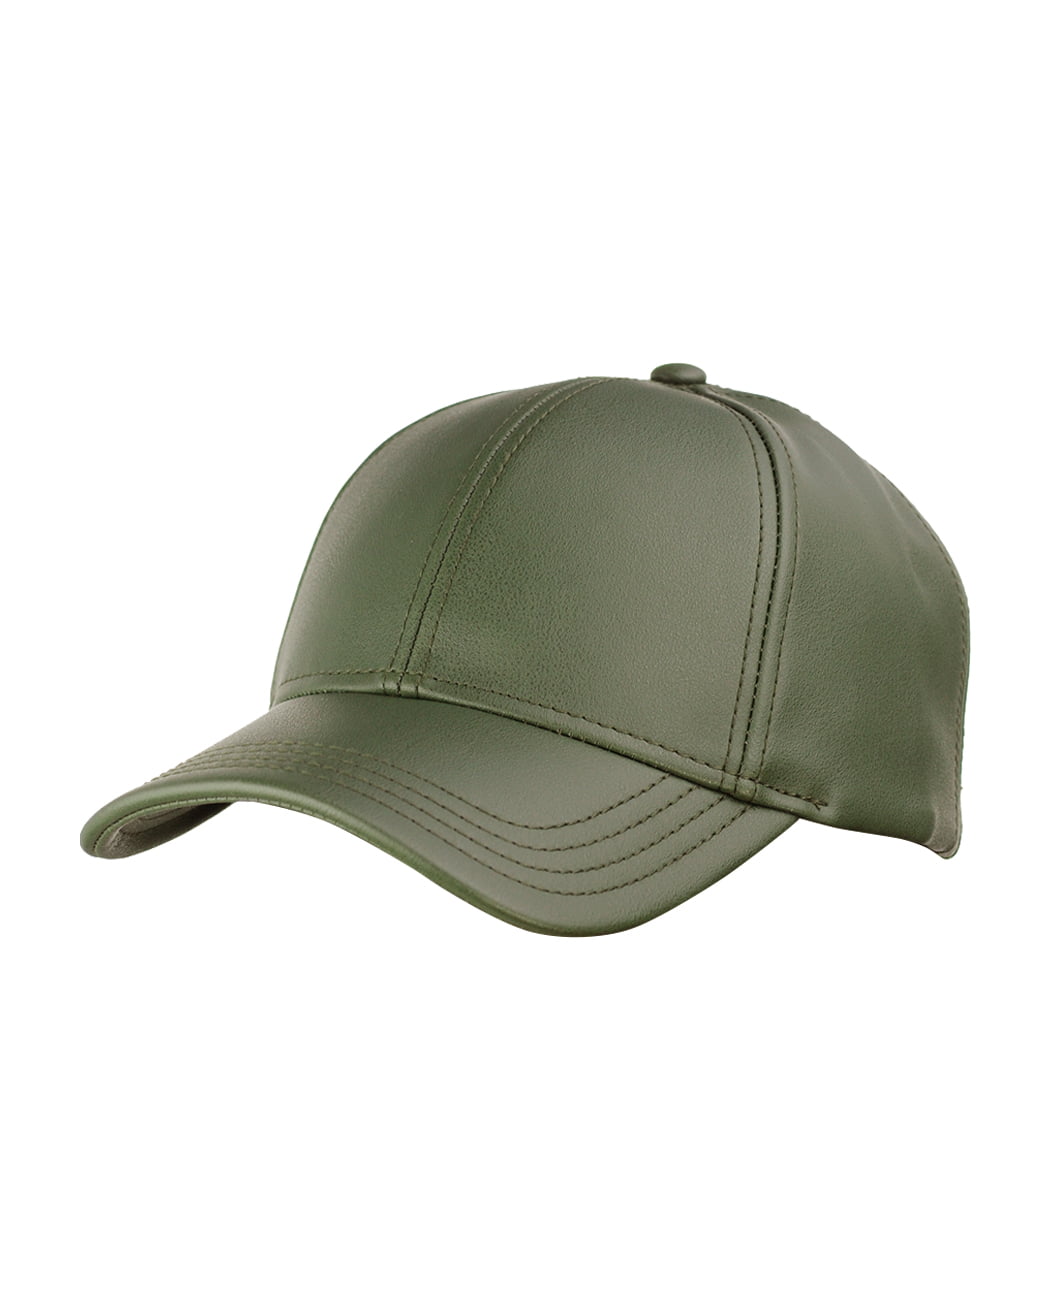 Mens Genuine 100% Soft Black Leather Pre Curved Peak Baseball Cap Hat 